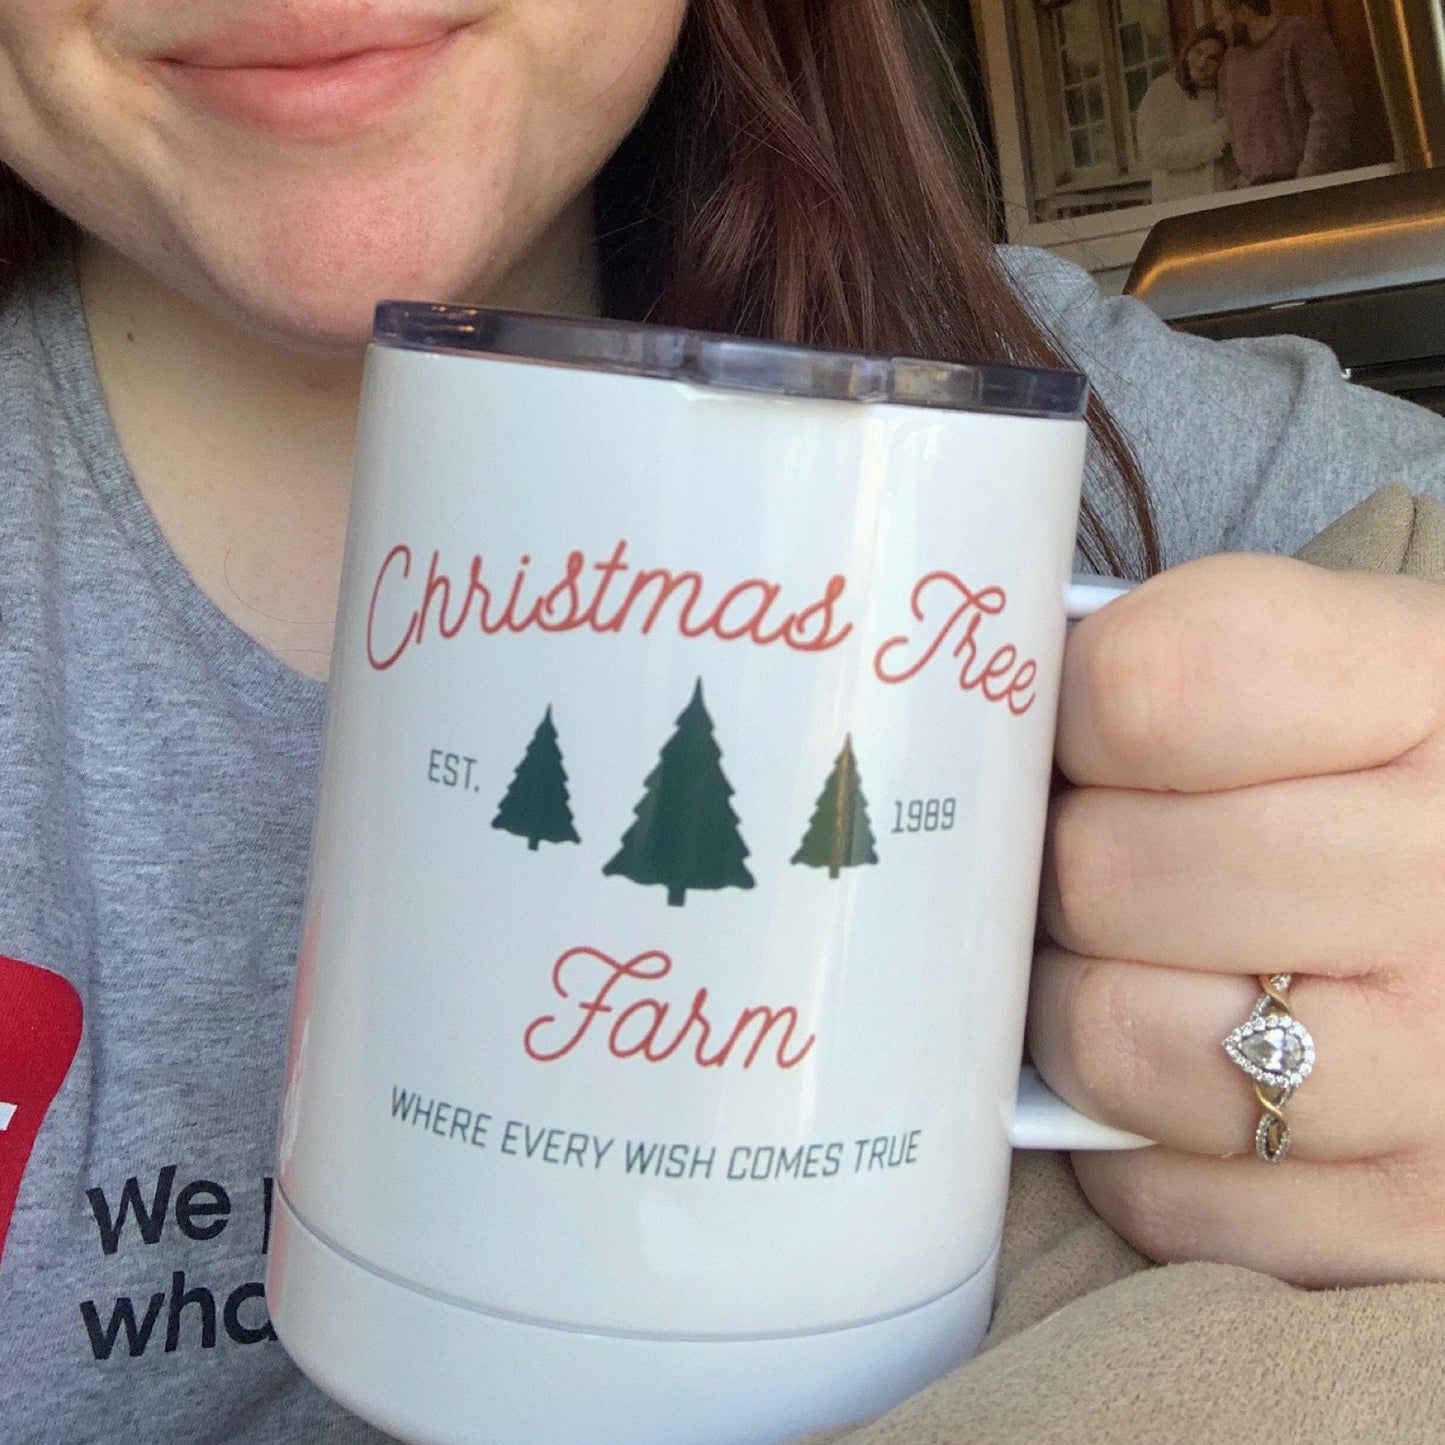 Christmas Tree Farm Insulated Insulated Camp Mug | Christmas Gift - Gift for Friend - Gift for Sister